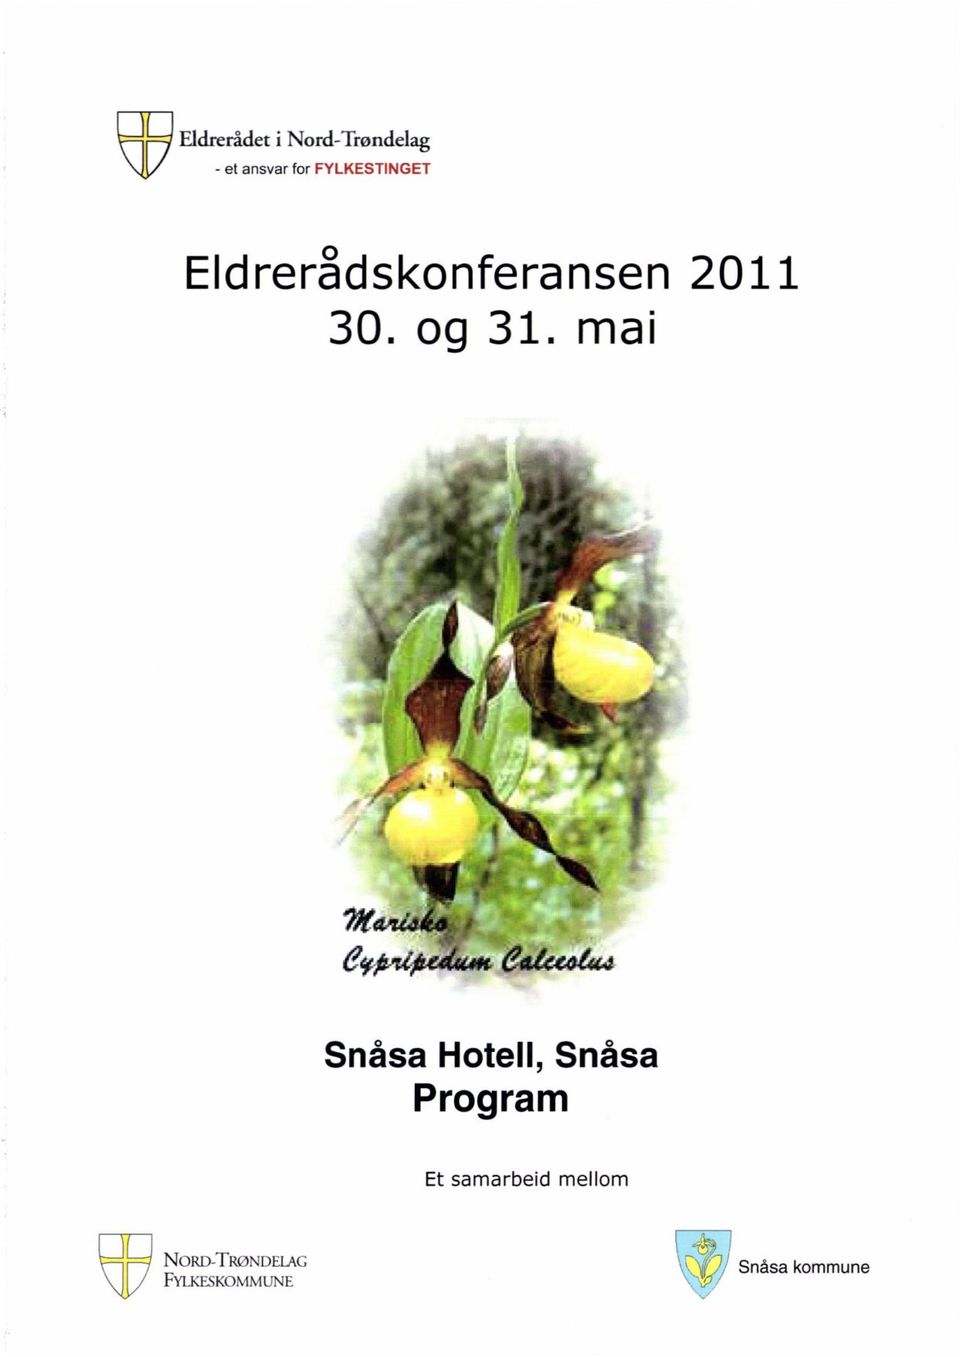 mai 4ftite e414(44,4 Snåsa Hotell, Snåsa Program Et